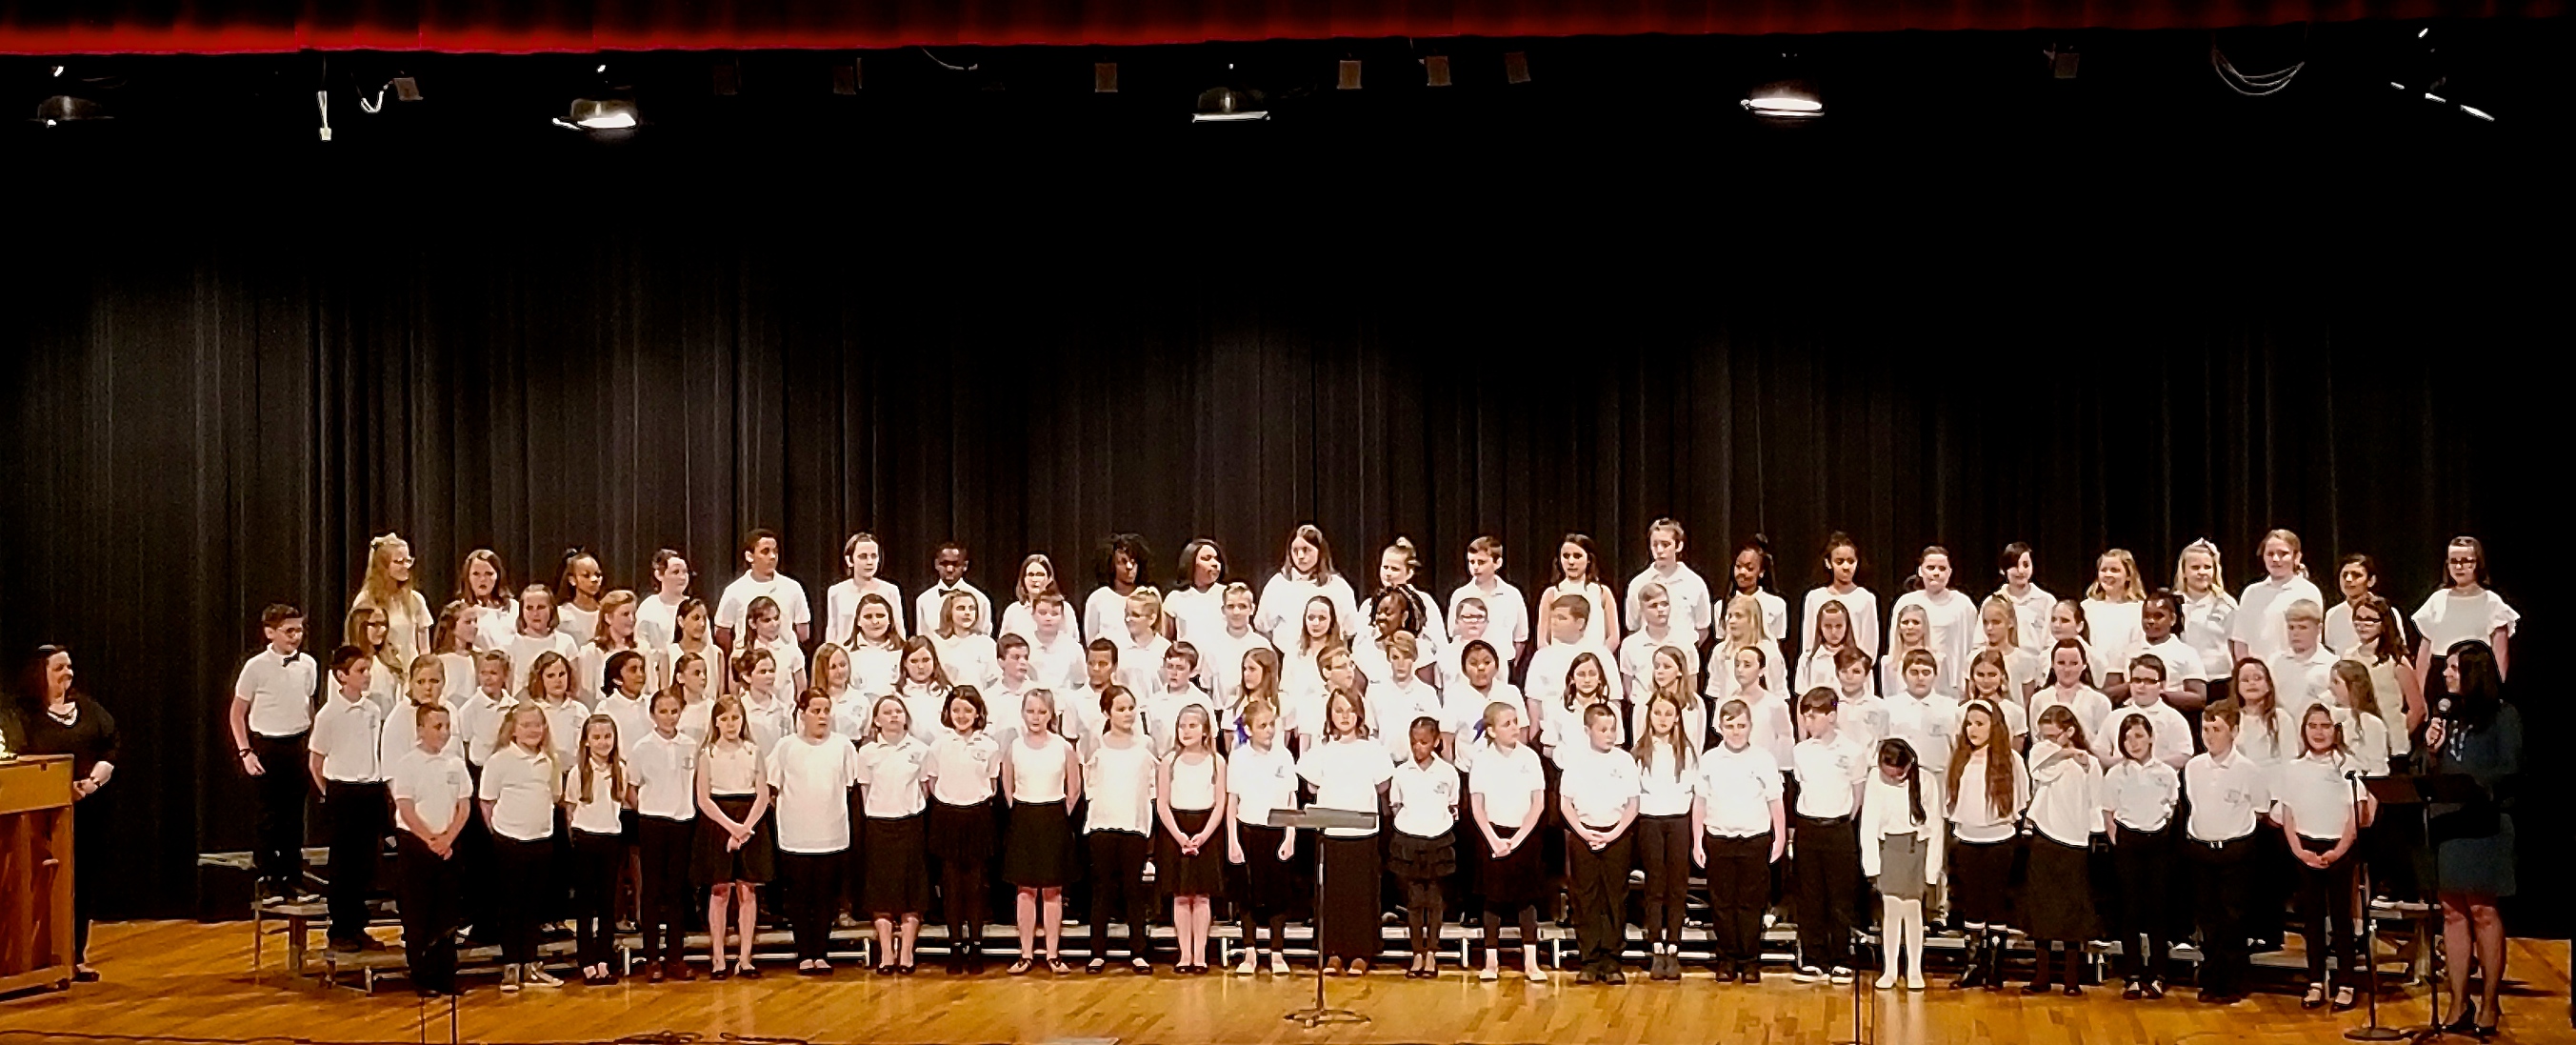 Knox County Schools Elementary Honors Choir, April 22, 2018